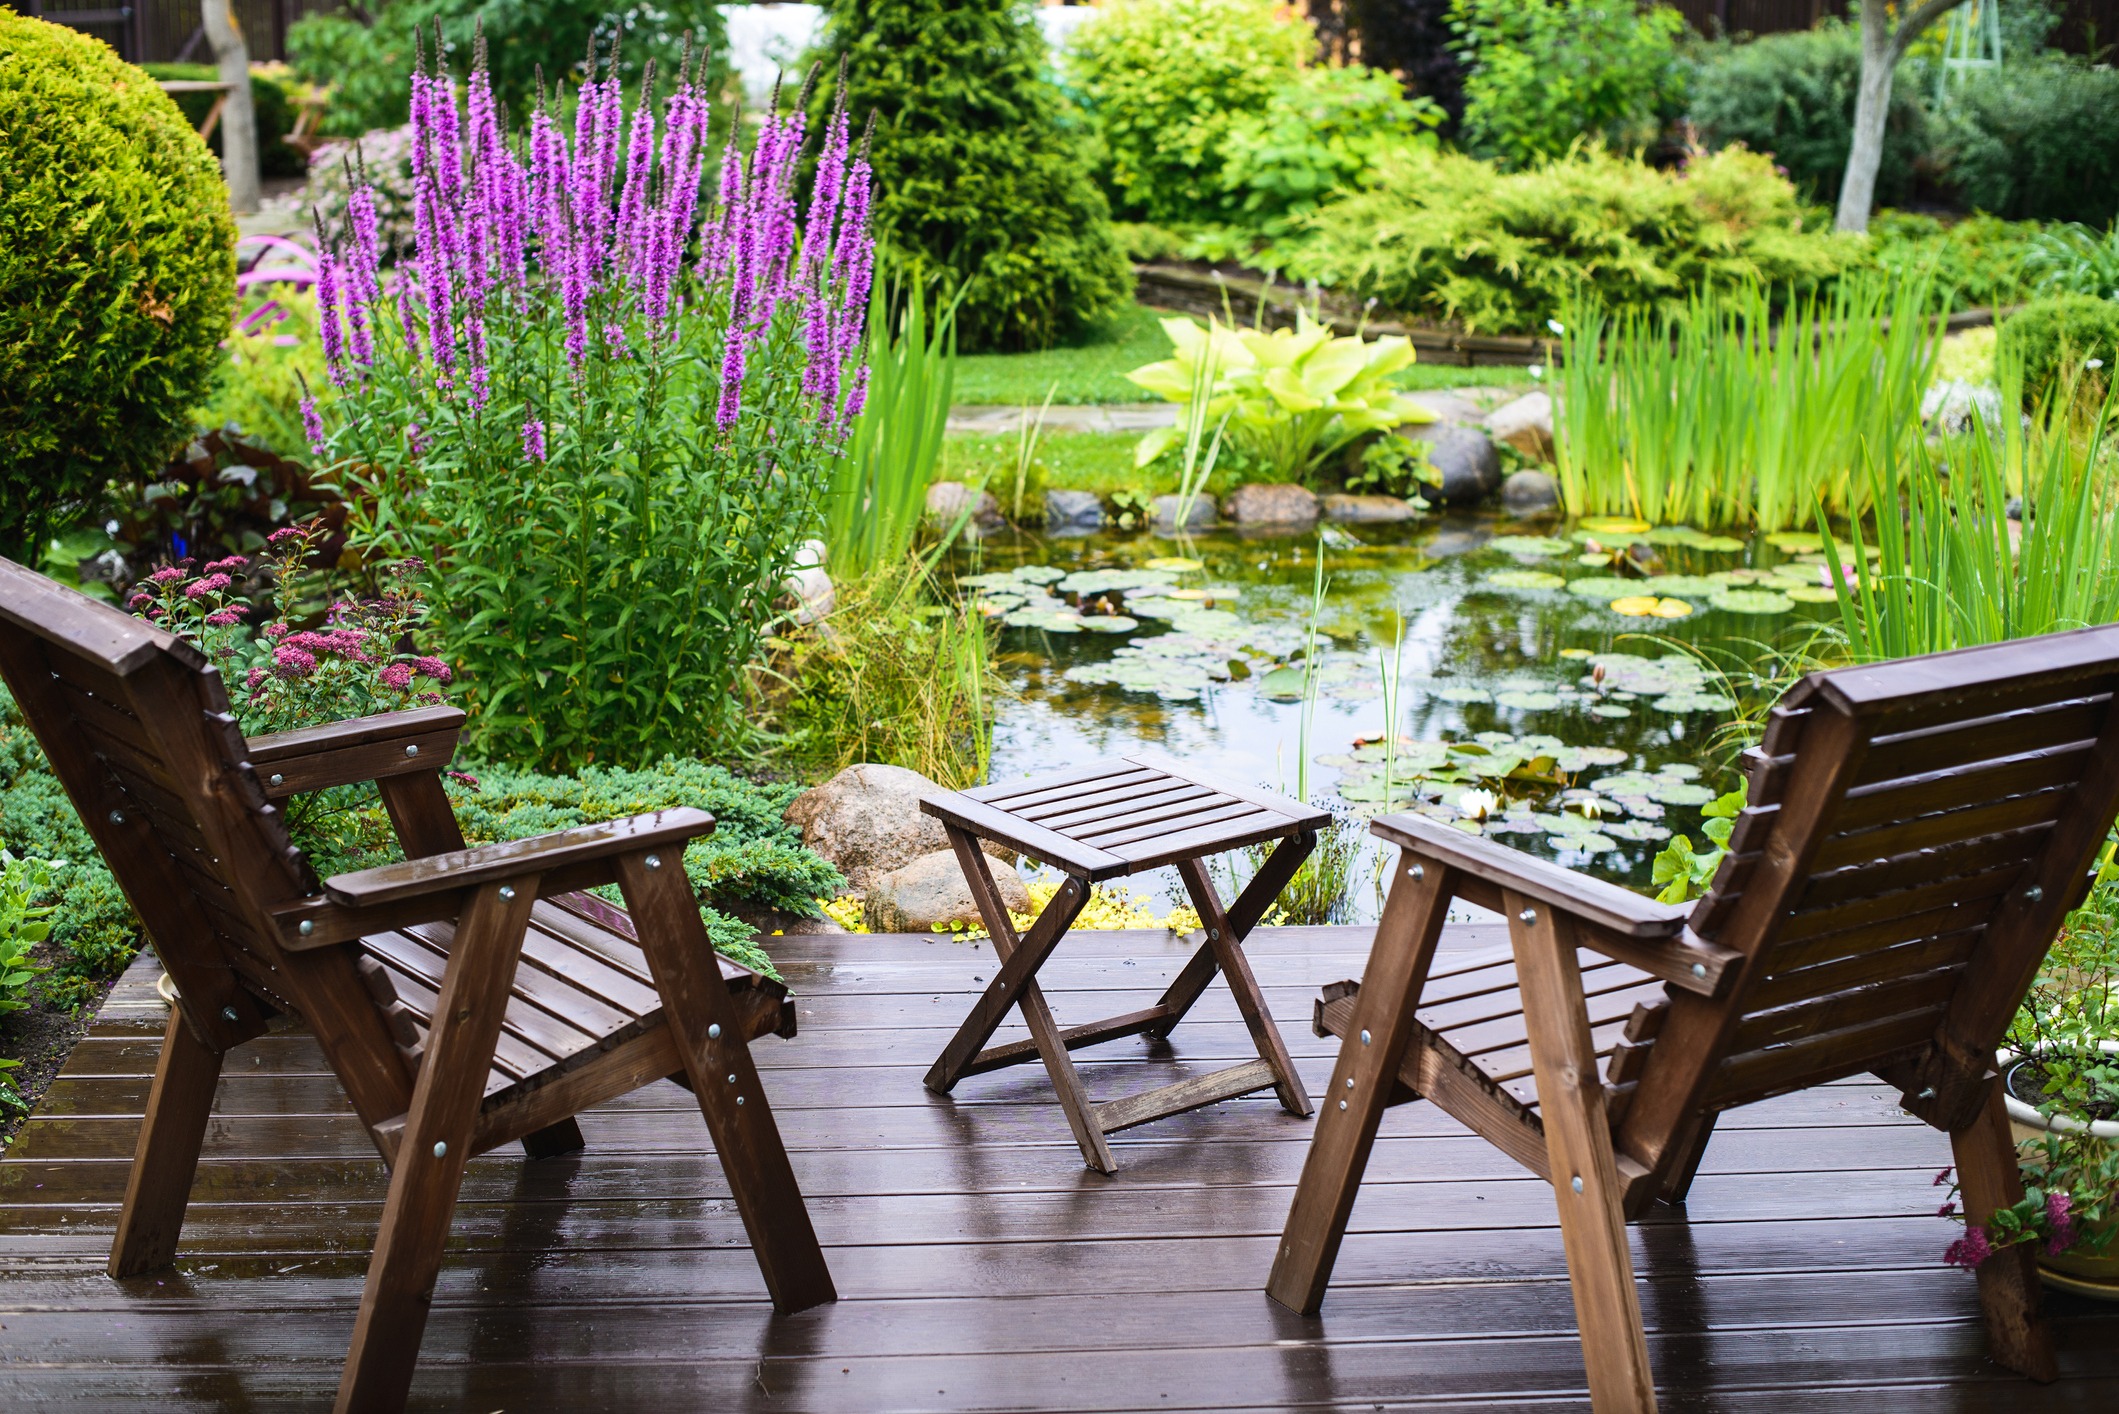 Deck and garden furniture near the pond 